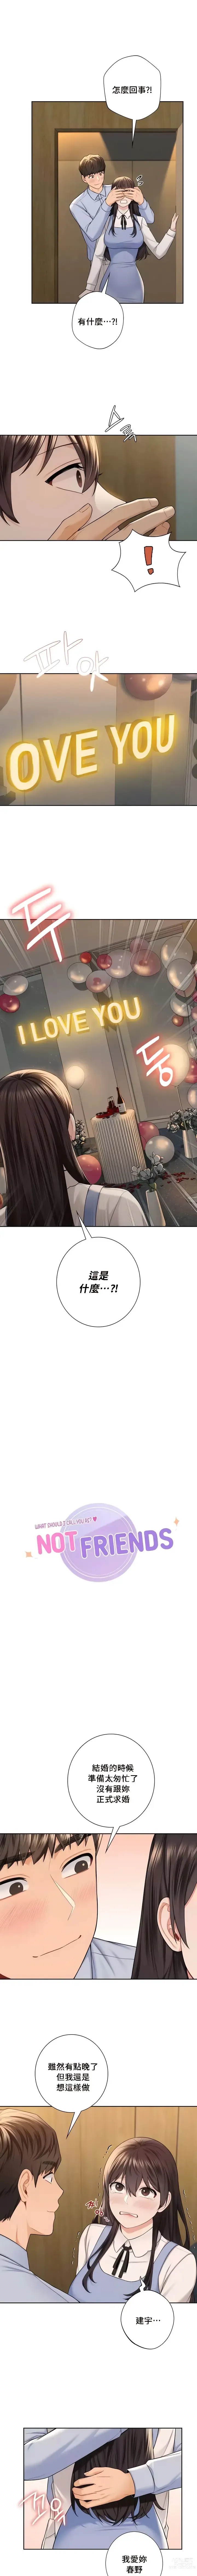 Page 580 of manga 不当朋友当恋人｜我們不是朋友 1-60  END